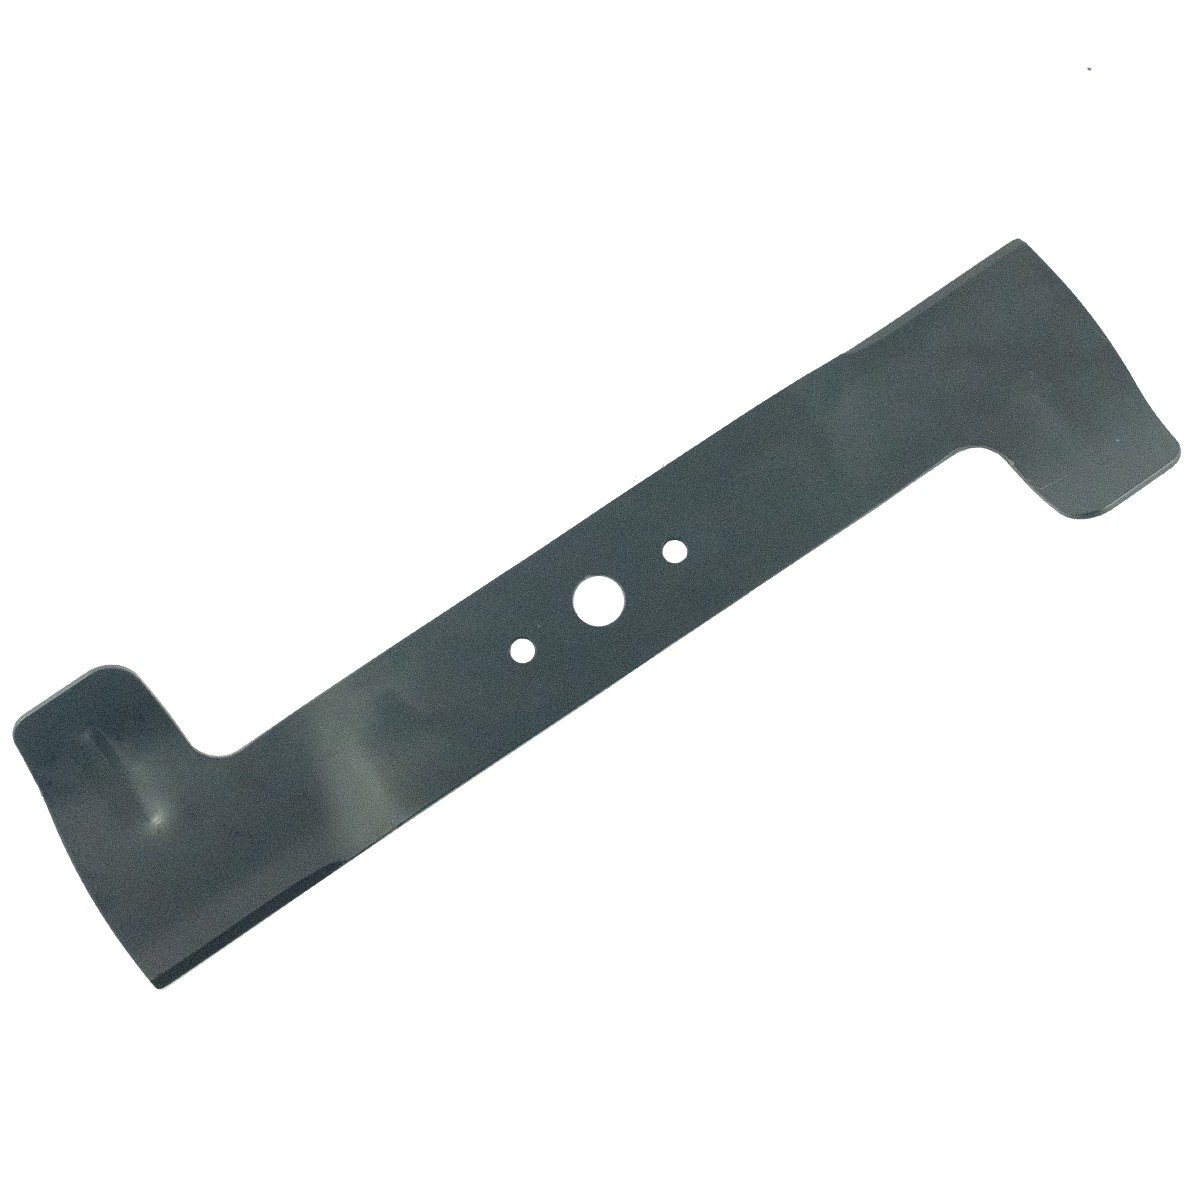 Knife, knives for lawn mower 420 mm, Stiga Estate 82004358/0 / 82004359/0